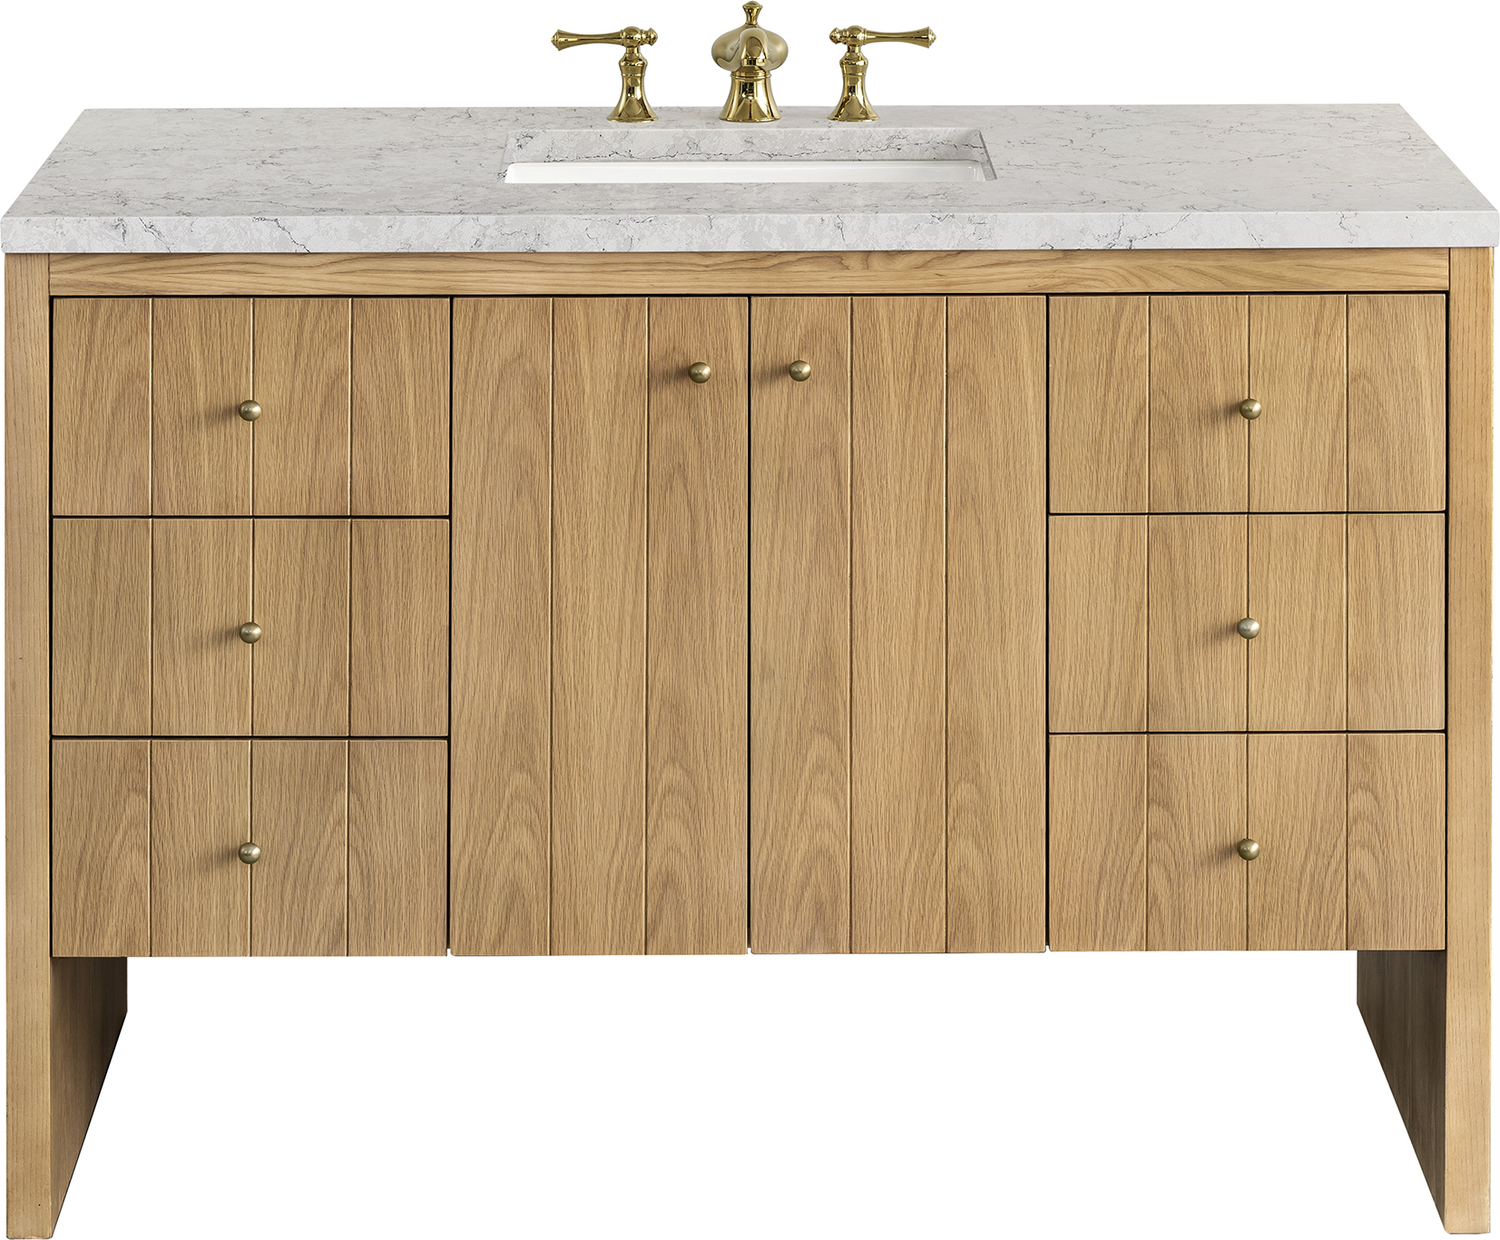 vanity unit with bowl sink James Martin Vanity Light Natural Oak Contemporary/Modern, Modern Farmhouse.Transitional